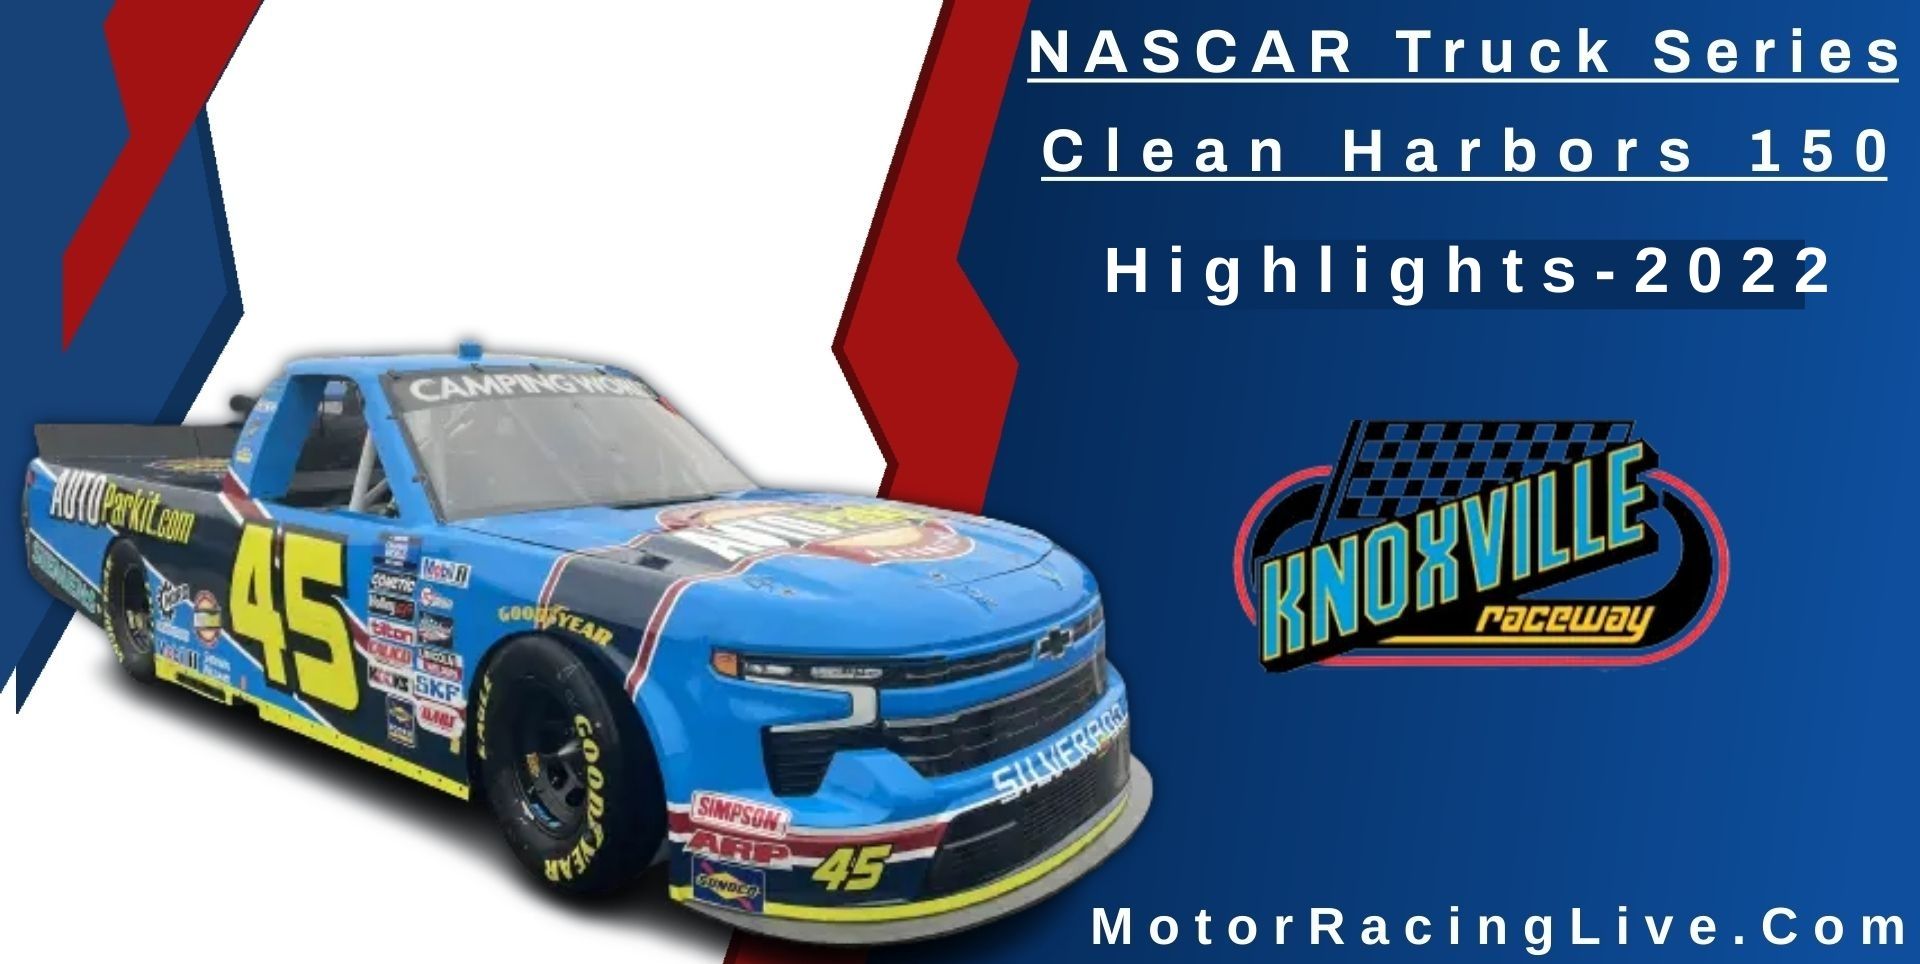 Clean Harbors 150 Highlights 2022 NASCAR Truck